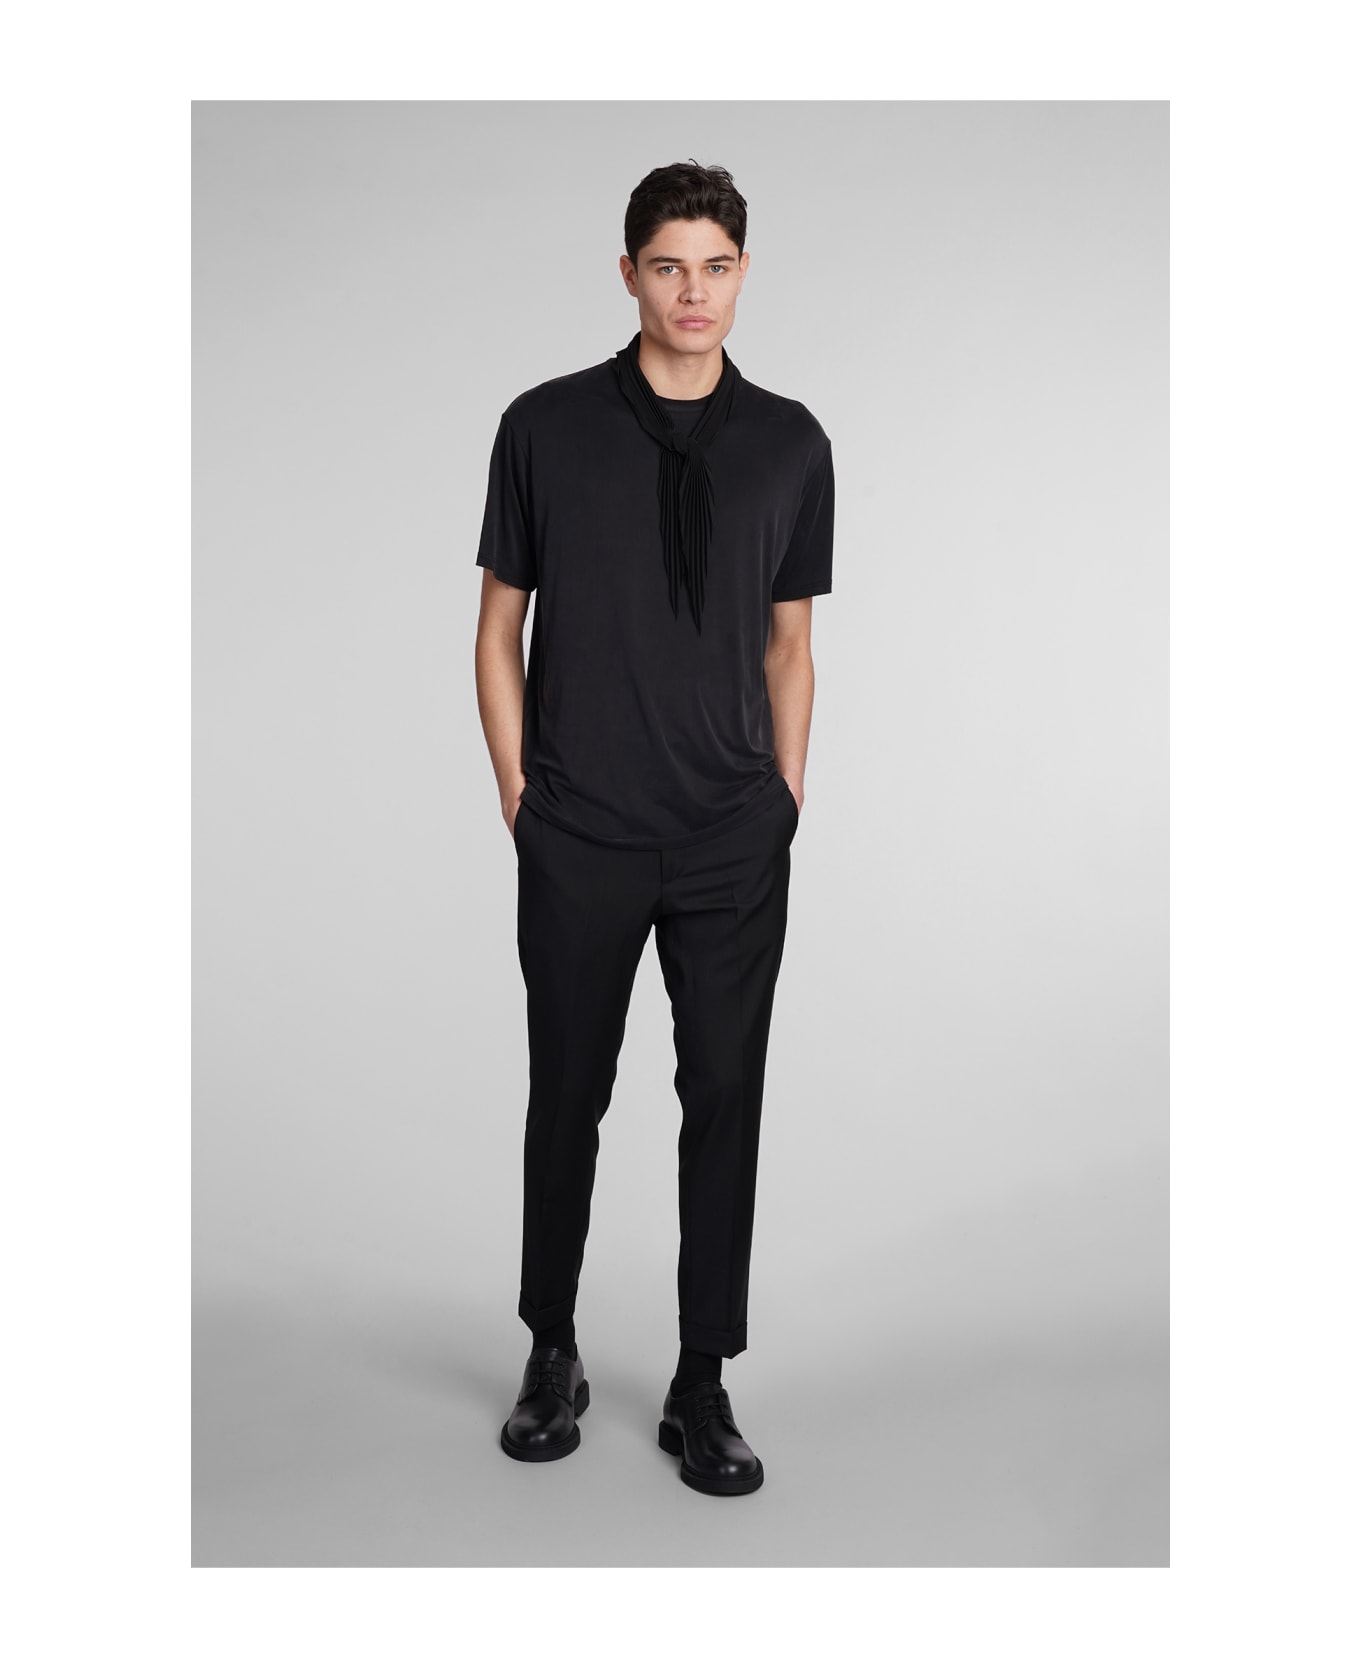 Low Brand B224 T-shirt In Black Polyamide Polyester - black